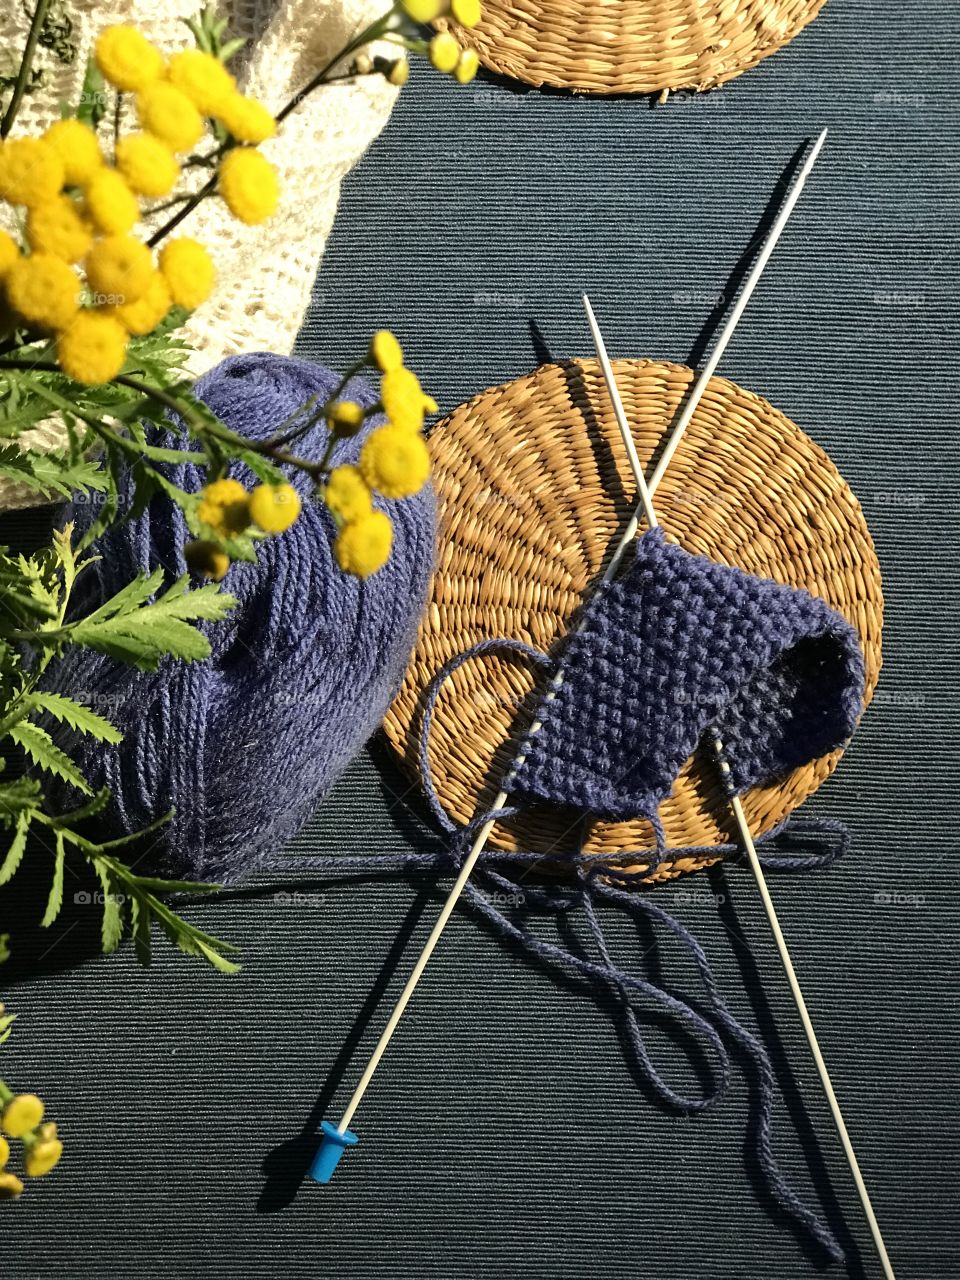 Knitting on a knit scarf